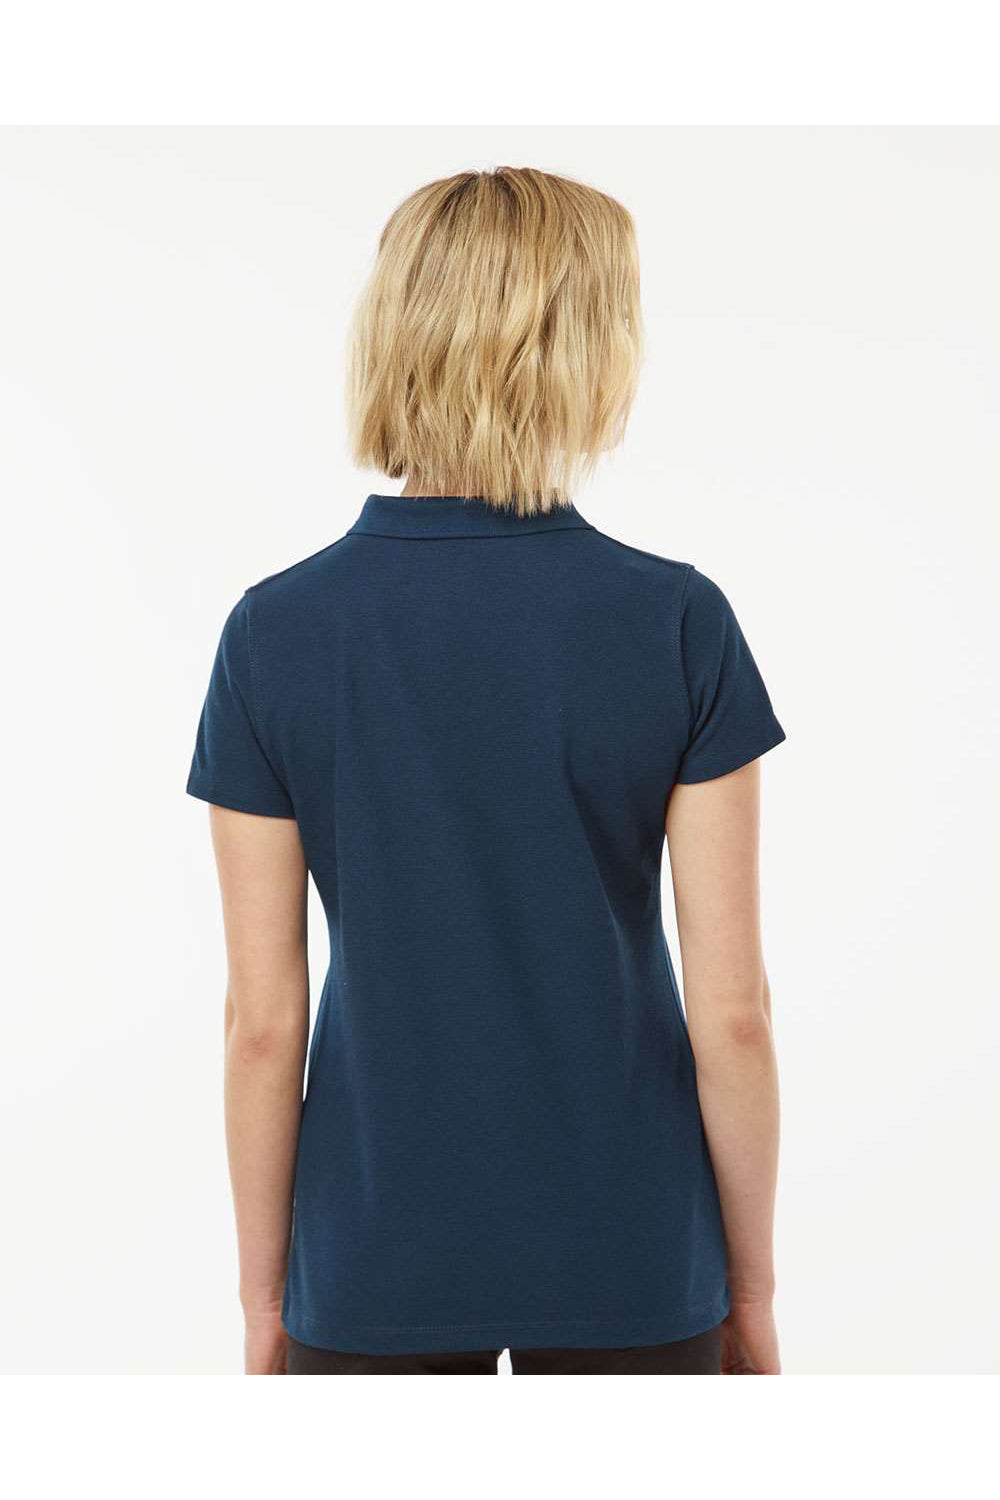 Tultex 401 Womens Sport Shirt Sleeve Polo Shirt Navy Blue Model Back